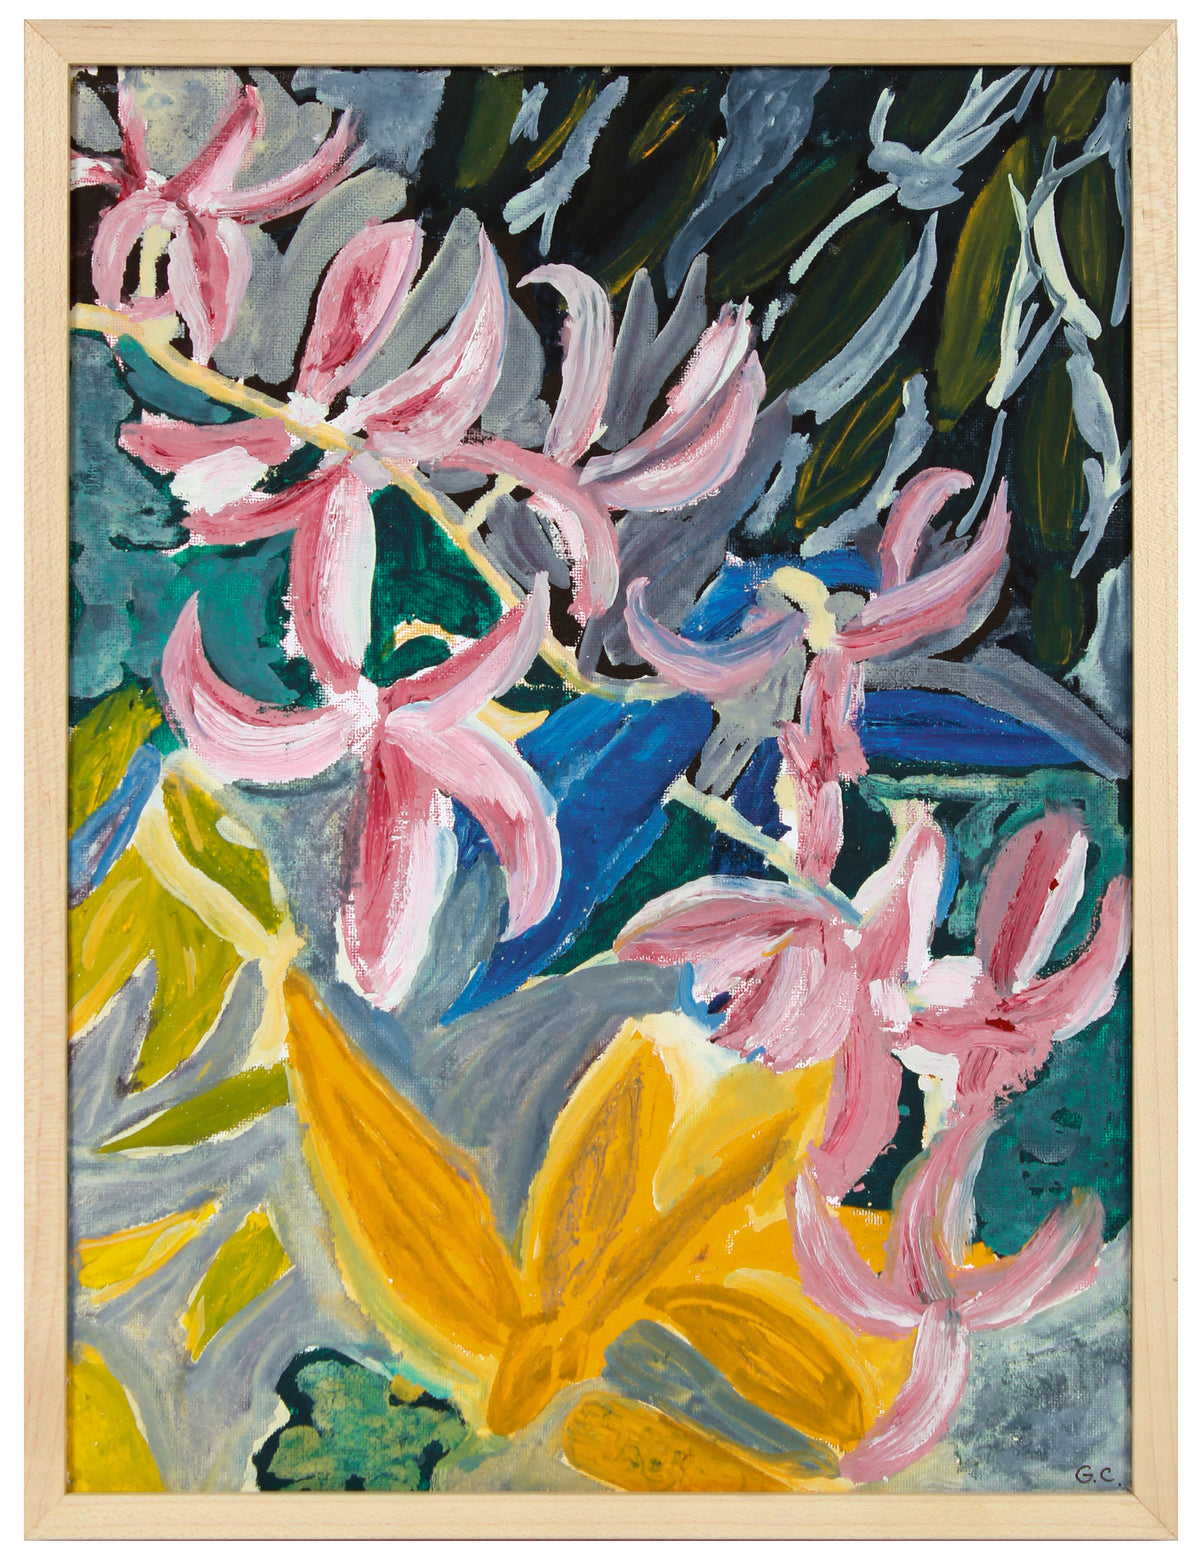 &lt;i&gt;Pink Orchid &lt;/i&gt; &lt;br&gt;2020 Oil on Canvas Mounted to Board &lt;br&gt;&lt;br&gt;#B2029